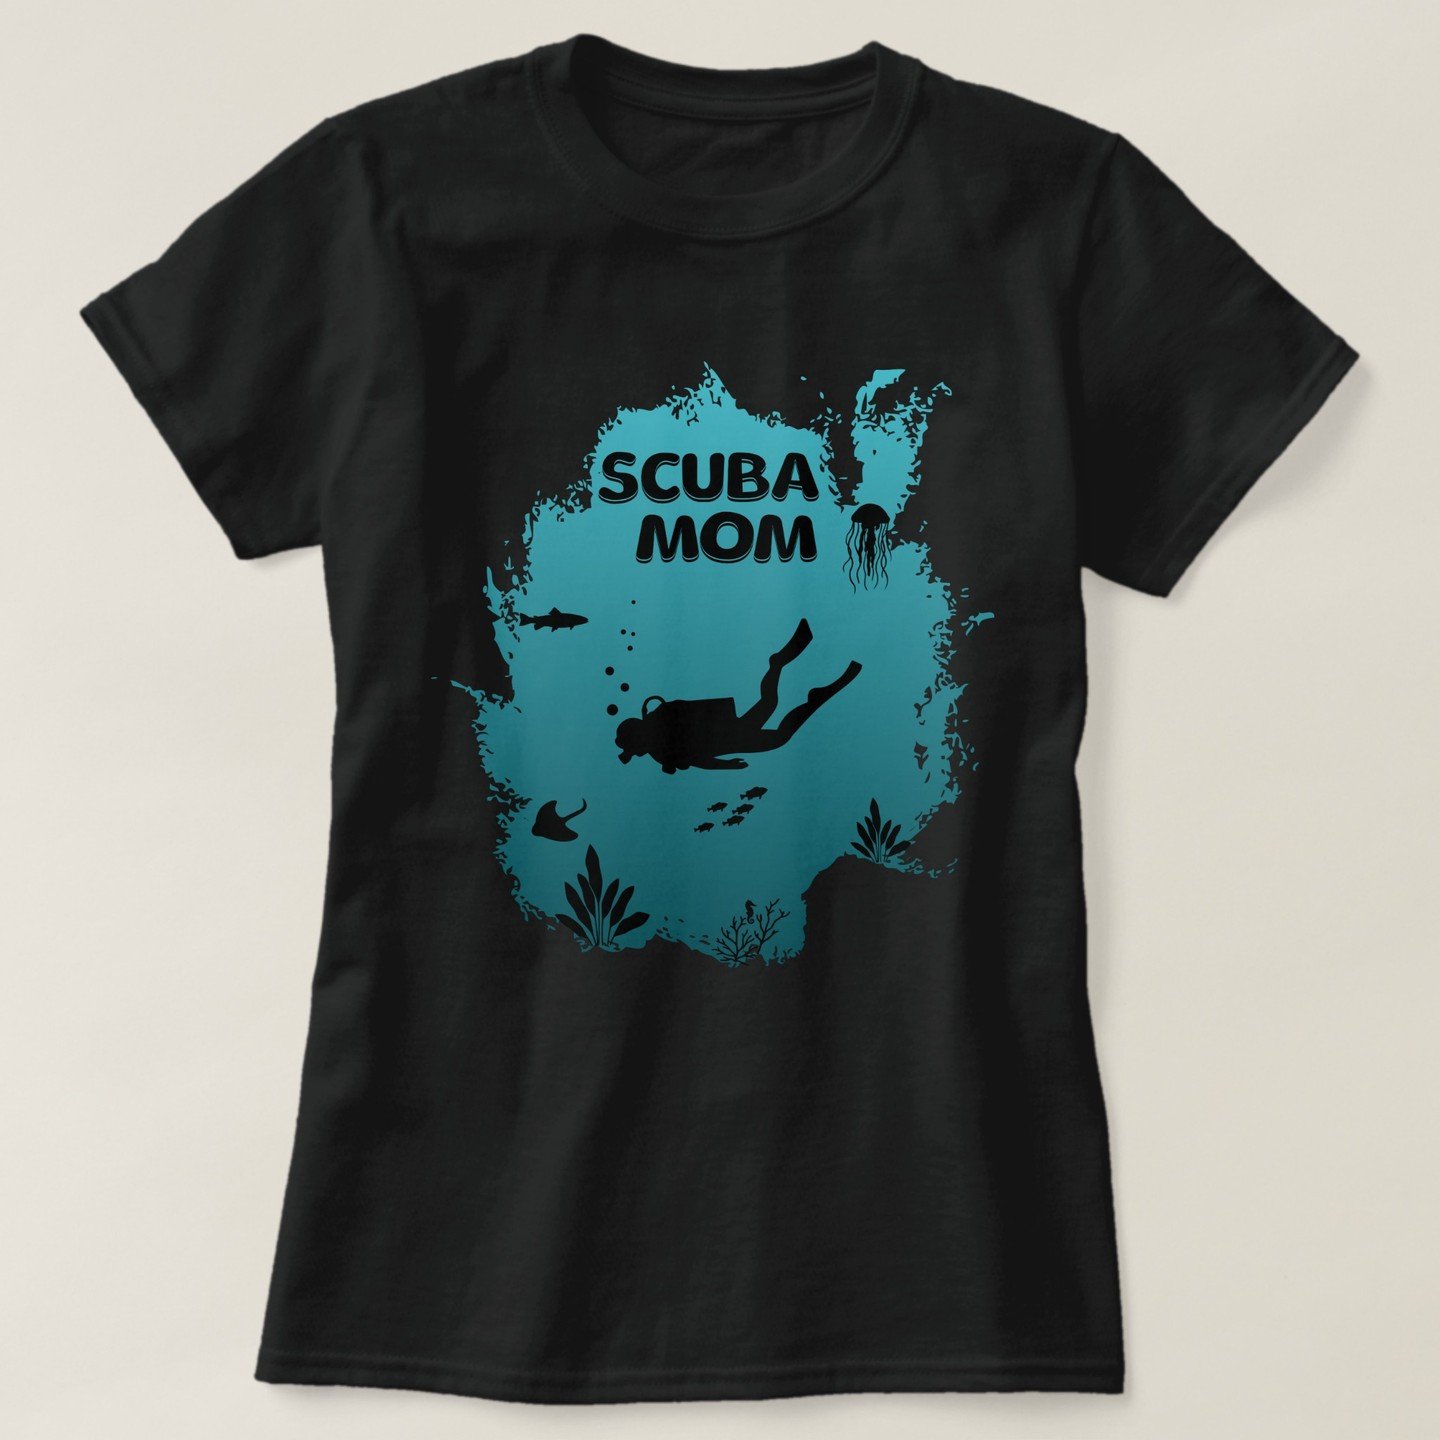 For the scuba diving mom! #linkinbio
.
#zazzle #redbubble #teepublic #zazzlemade #shirt #stickers #mugs #mothersday #formom #scubamom #scubadivingmom #scuba